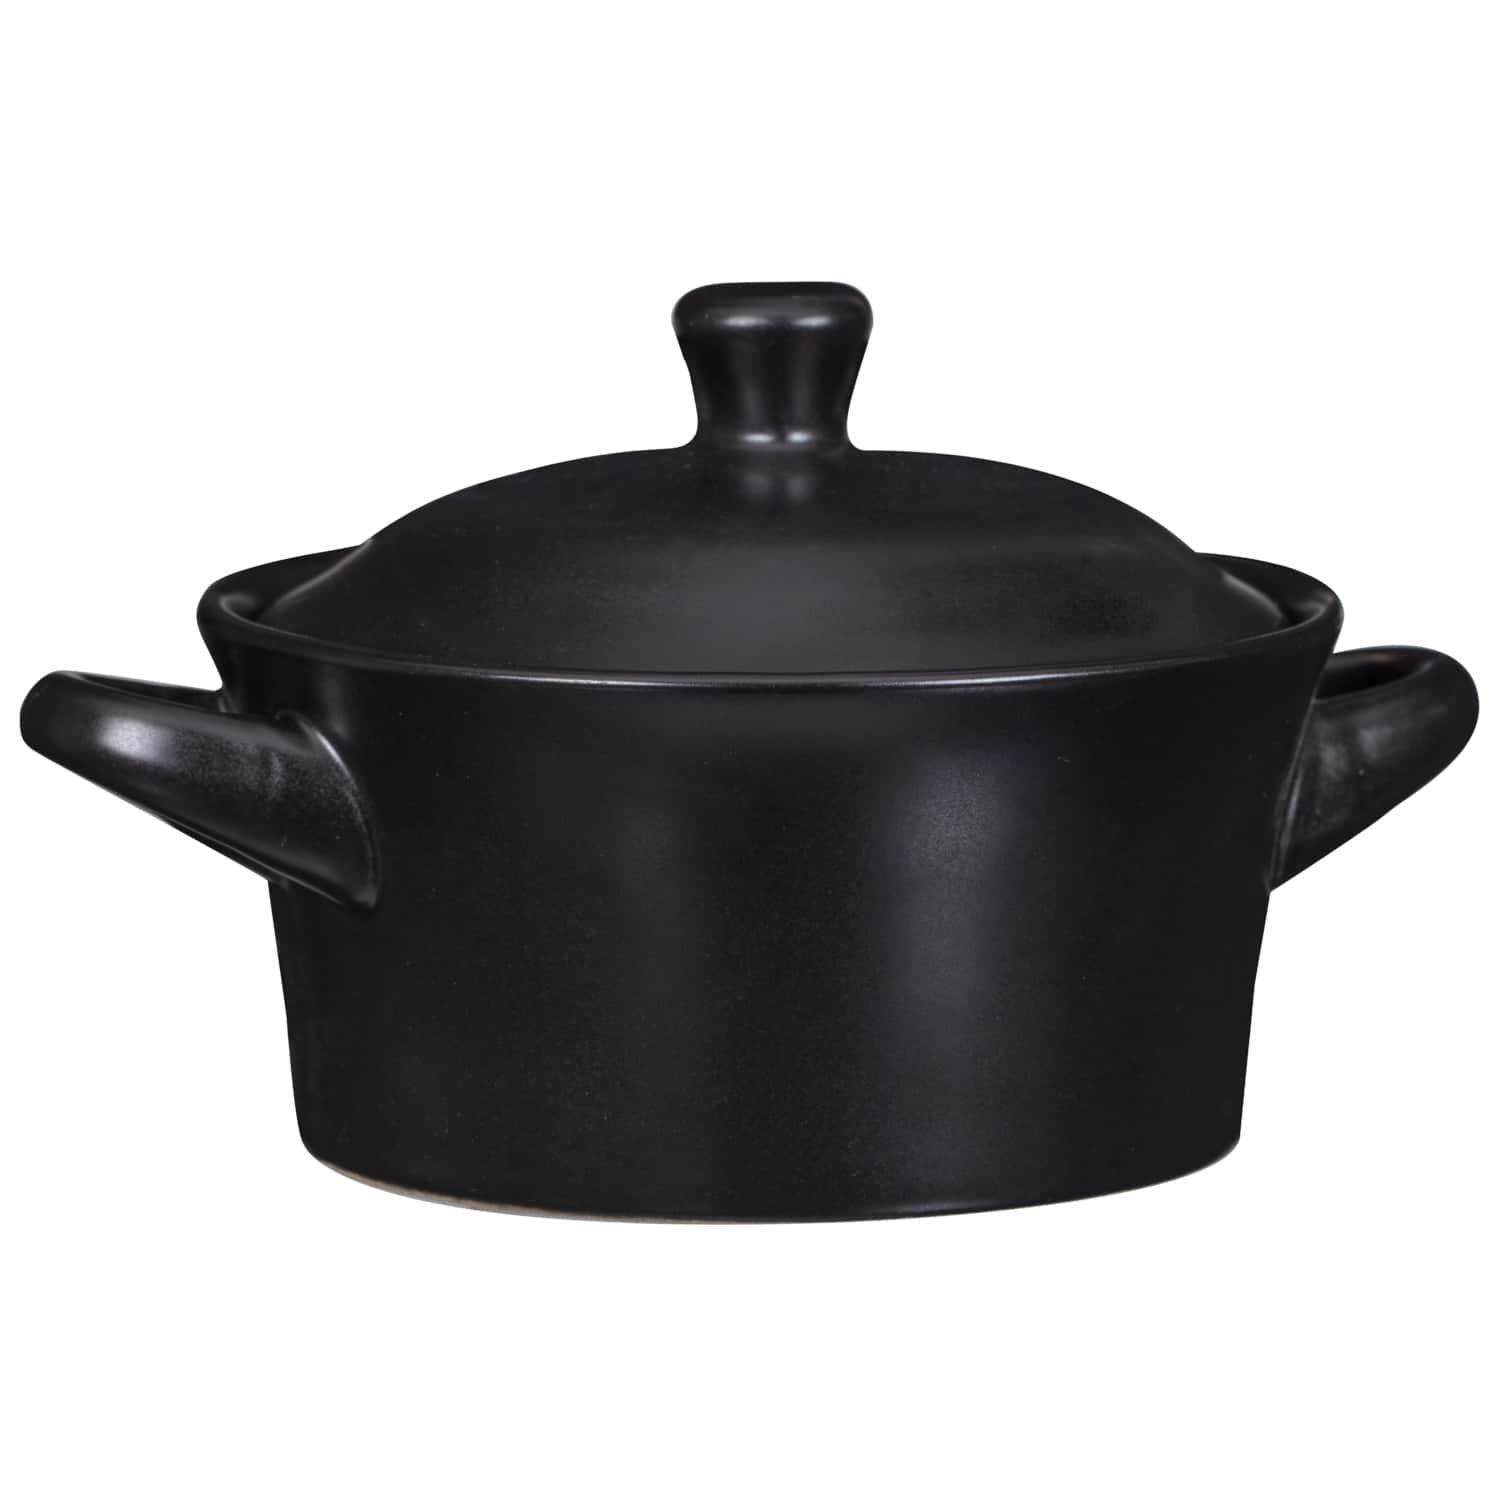 https://www.bmstores.co.uk/images/hpcProductImage/imgSource/390145-urban-paradise-mini-casserole-dish-black.jpg